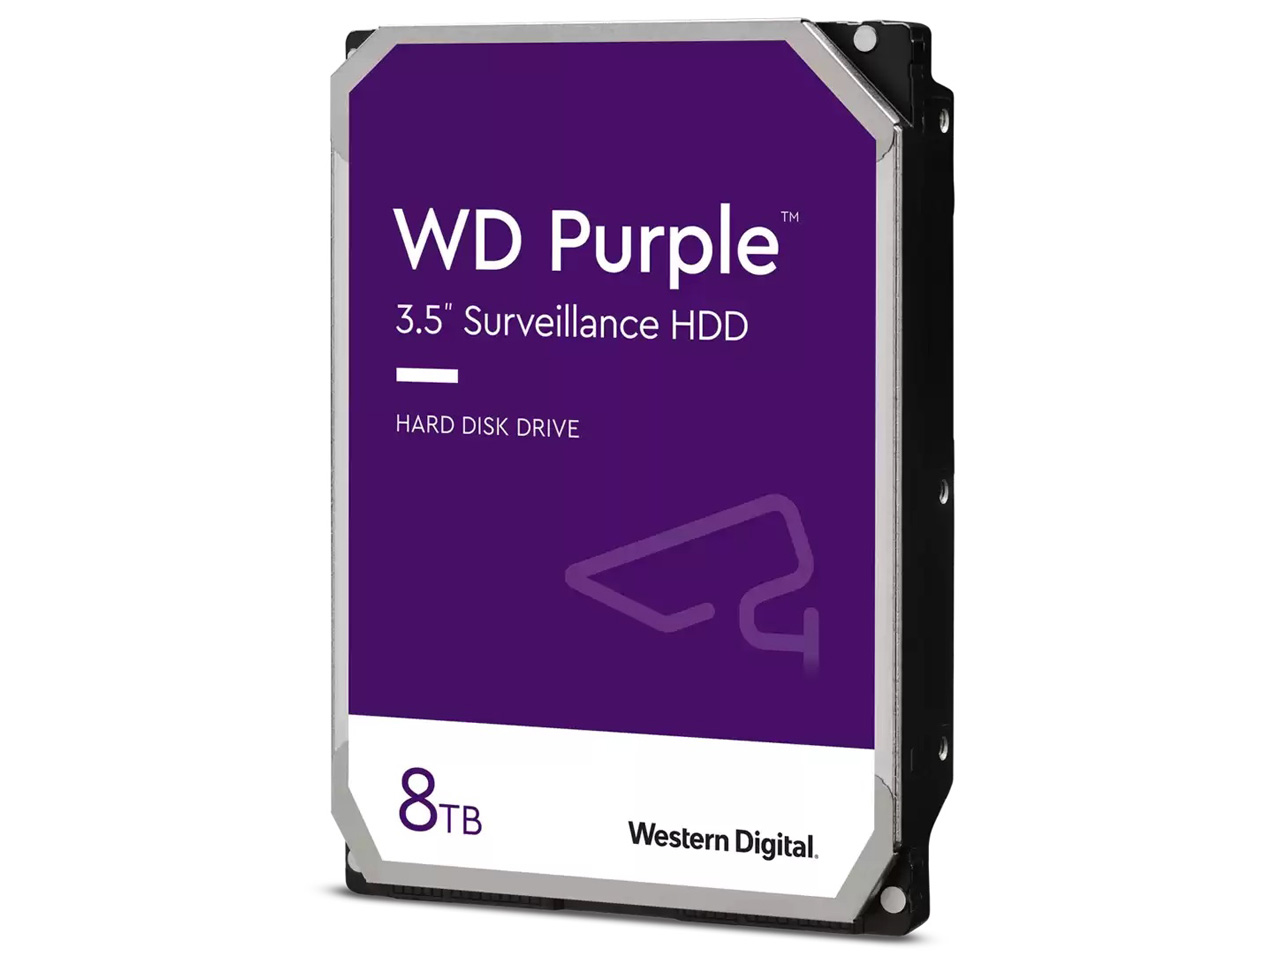 Western Digital ウエスタンデジタル WD85PURZ [ WD Purple 内蔵 HDD ハードディスク 8TB CMR 3.5インチ SATA キャッシュ256MB 監視システム メーカー保証3年 ]